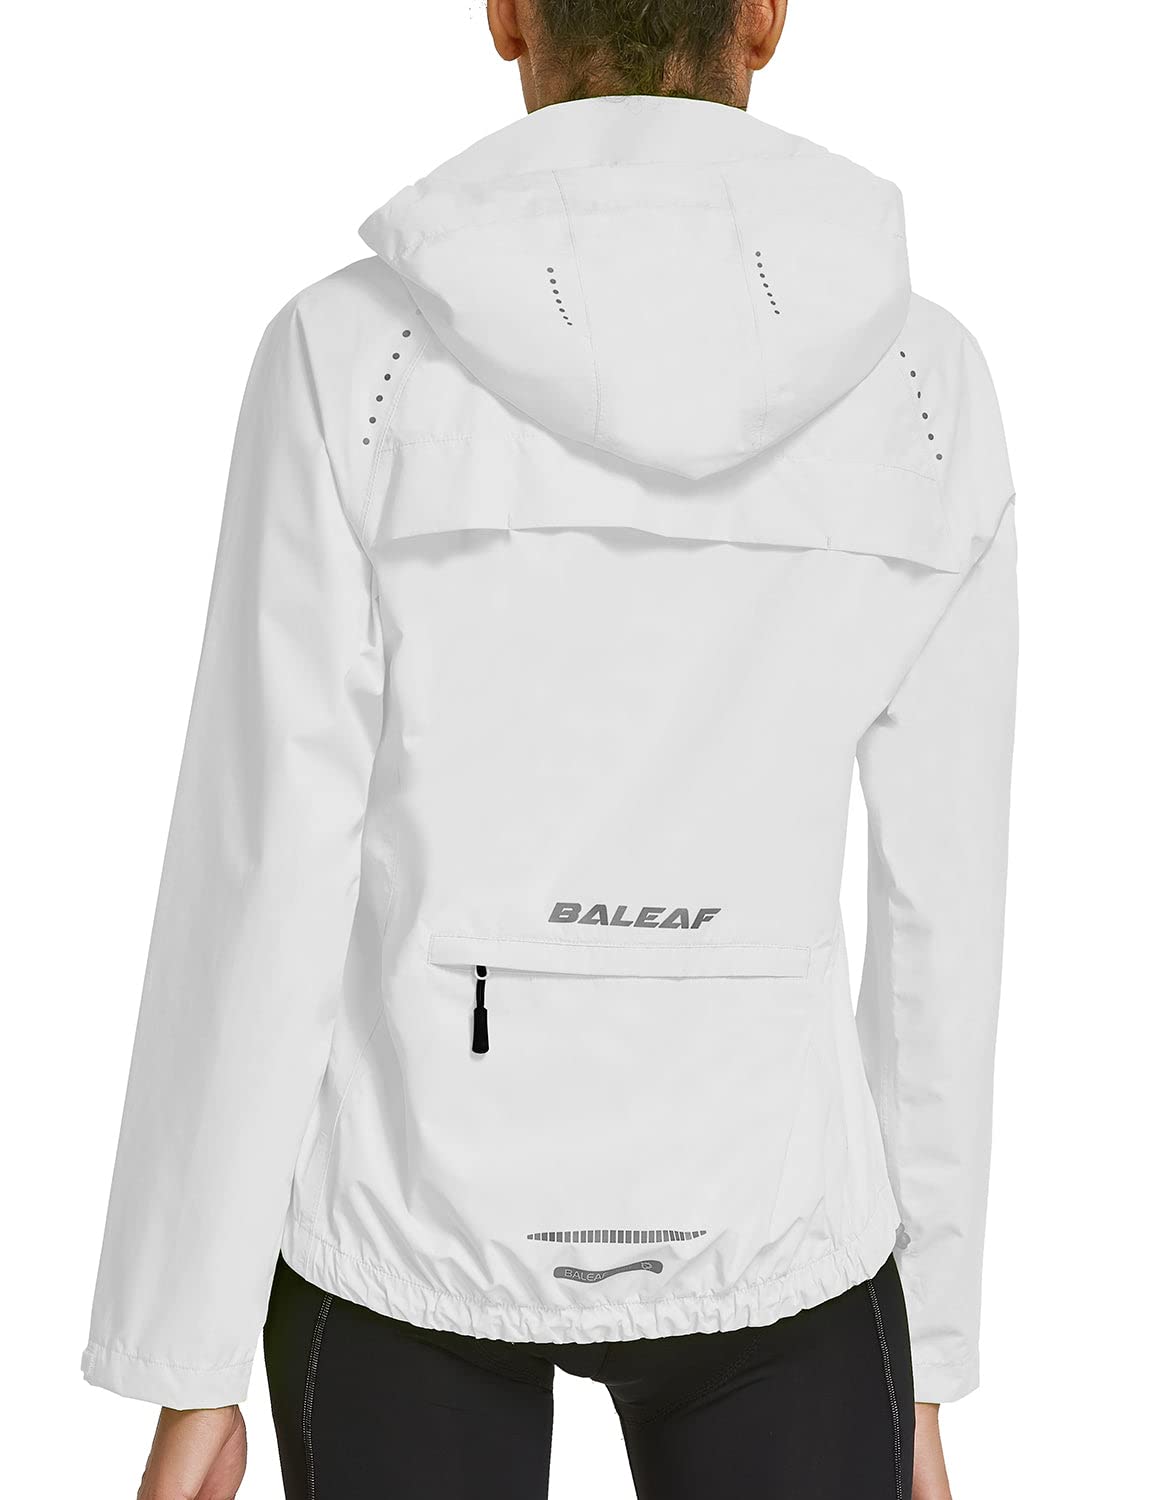 BALEAF Women's Running Rain Jacket